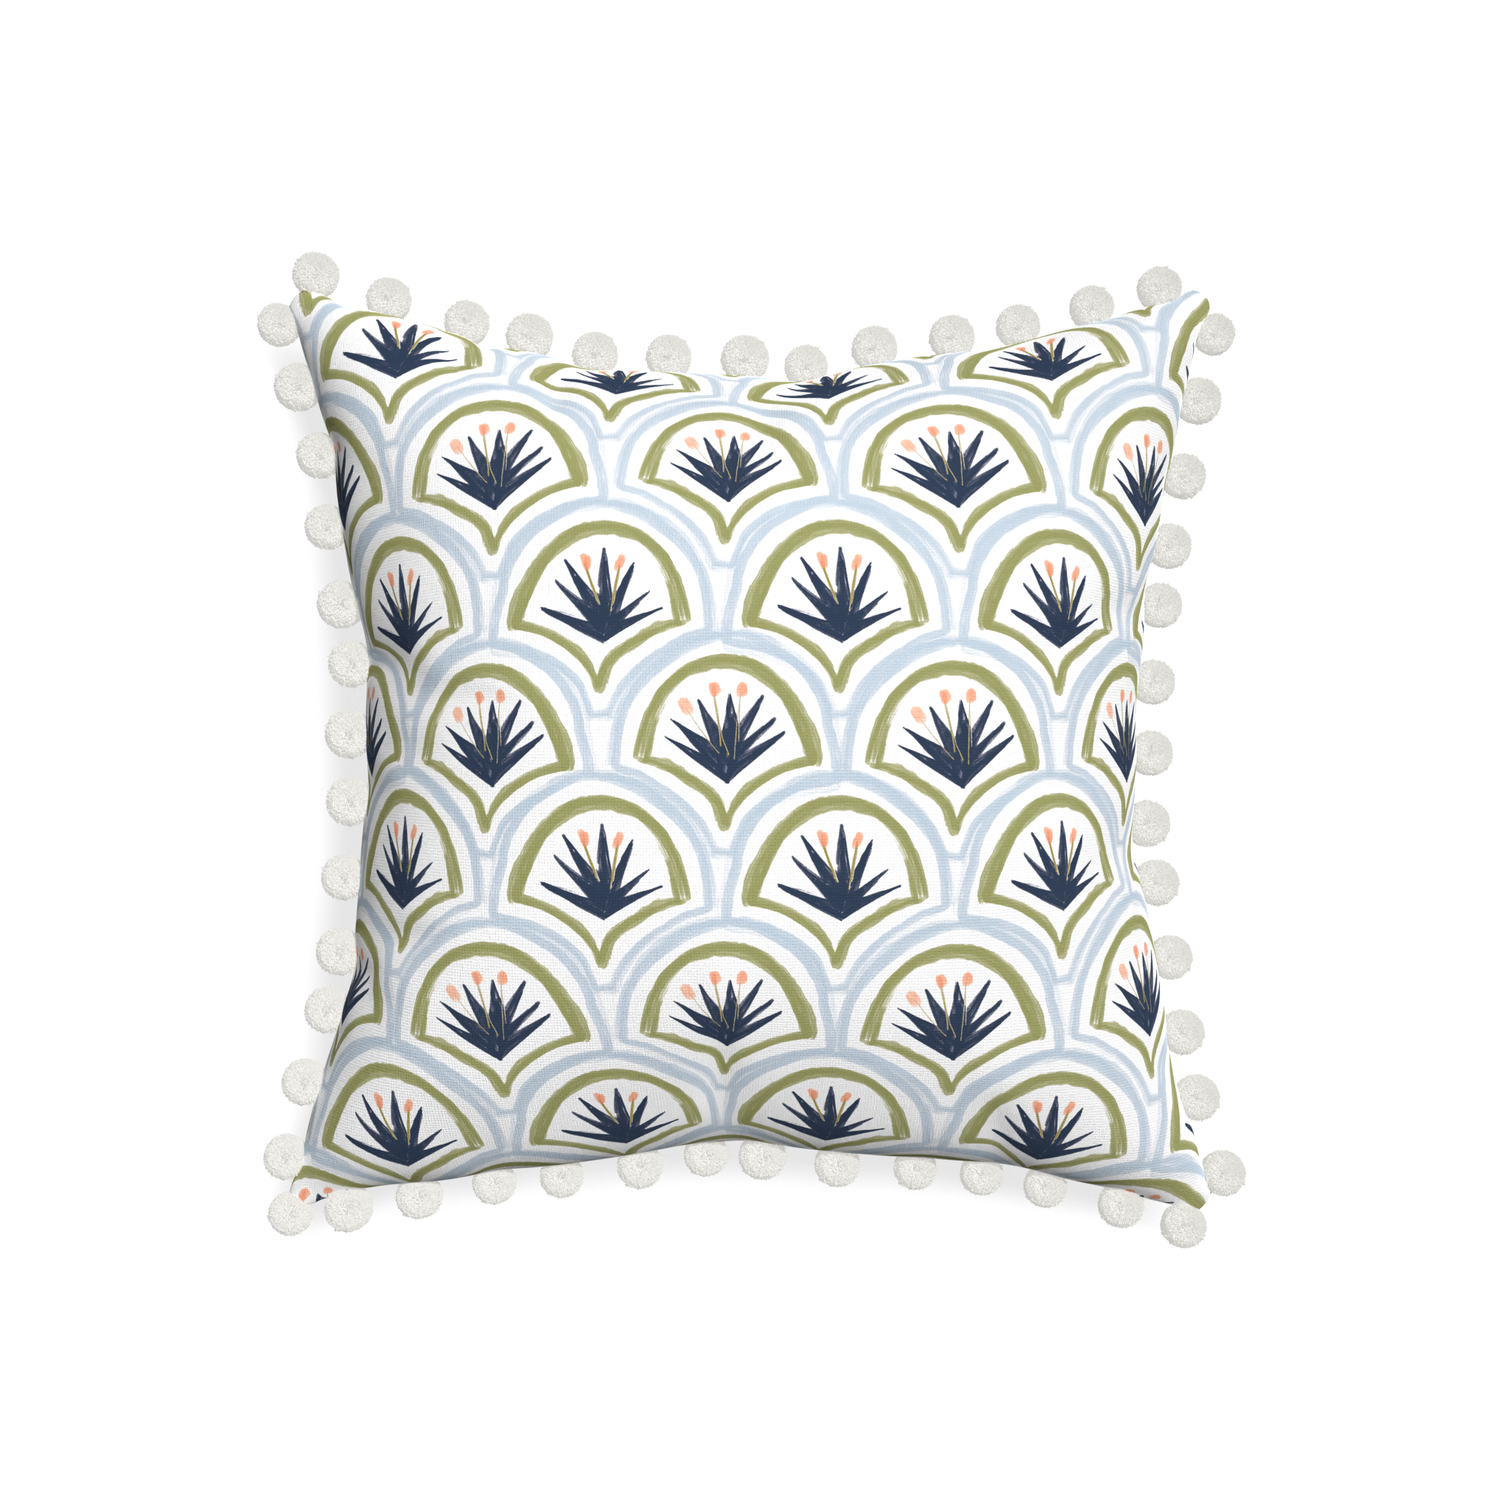 20-square thatcher midnight custom art deco palm patternpillow with snow pom pom on white background